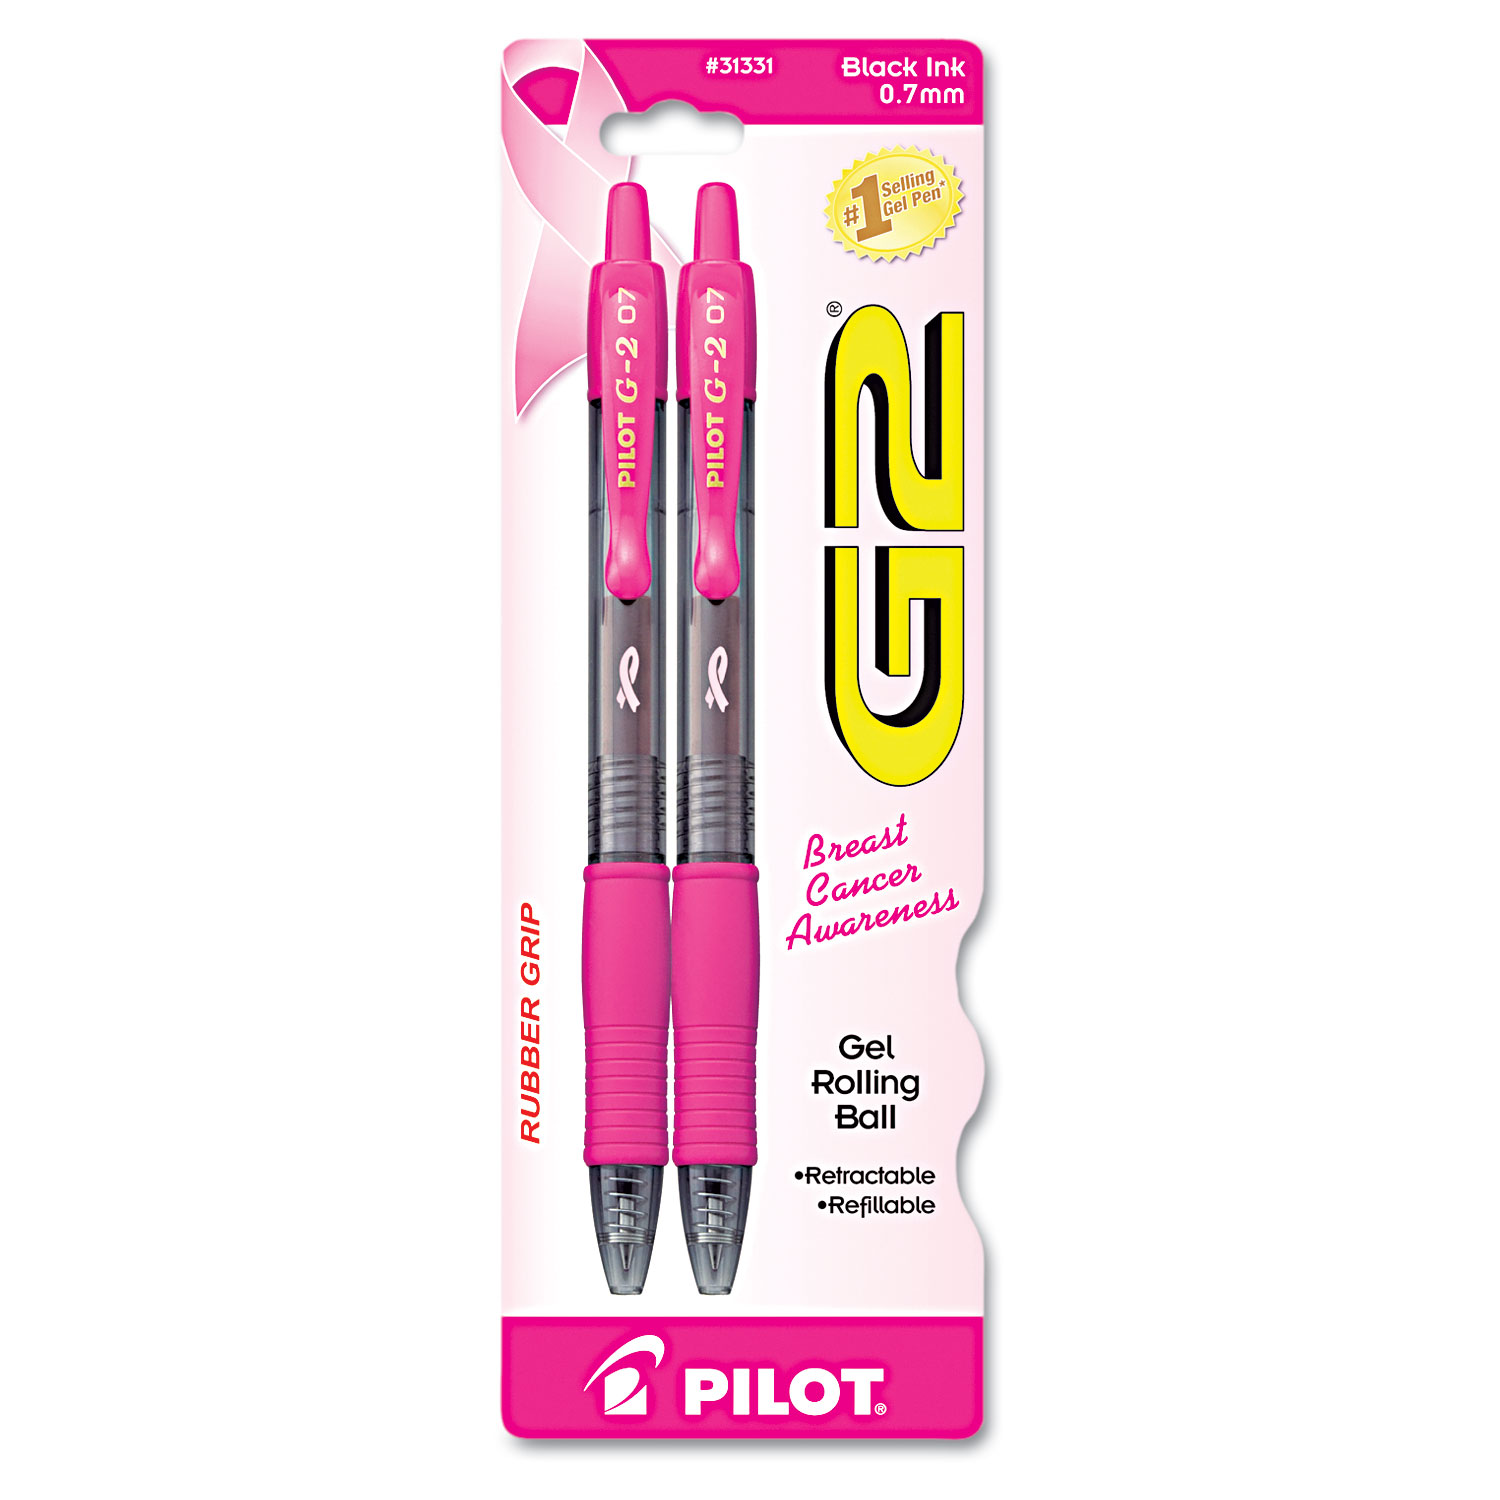  Pilot 31331 G2 Premium Pink-Ribbon Retractable Gel Pen, 0.7mm, Black Ink, Smoke Barrel, 2 Pens (PIL31331) 